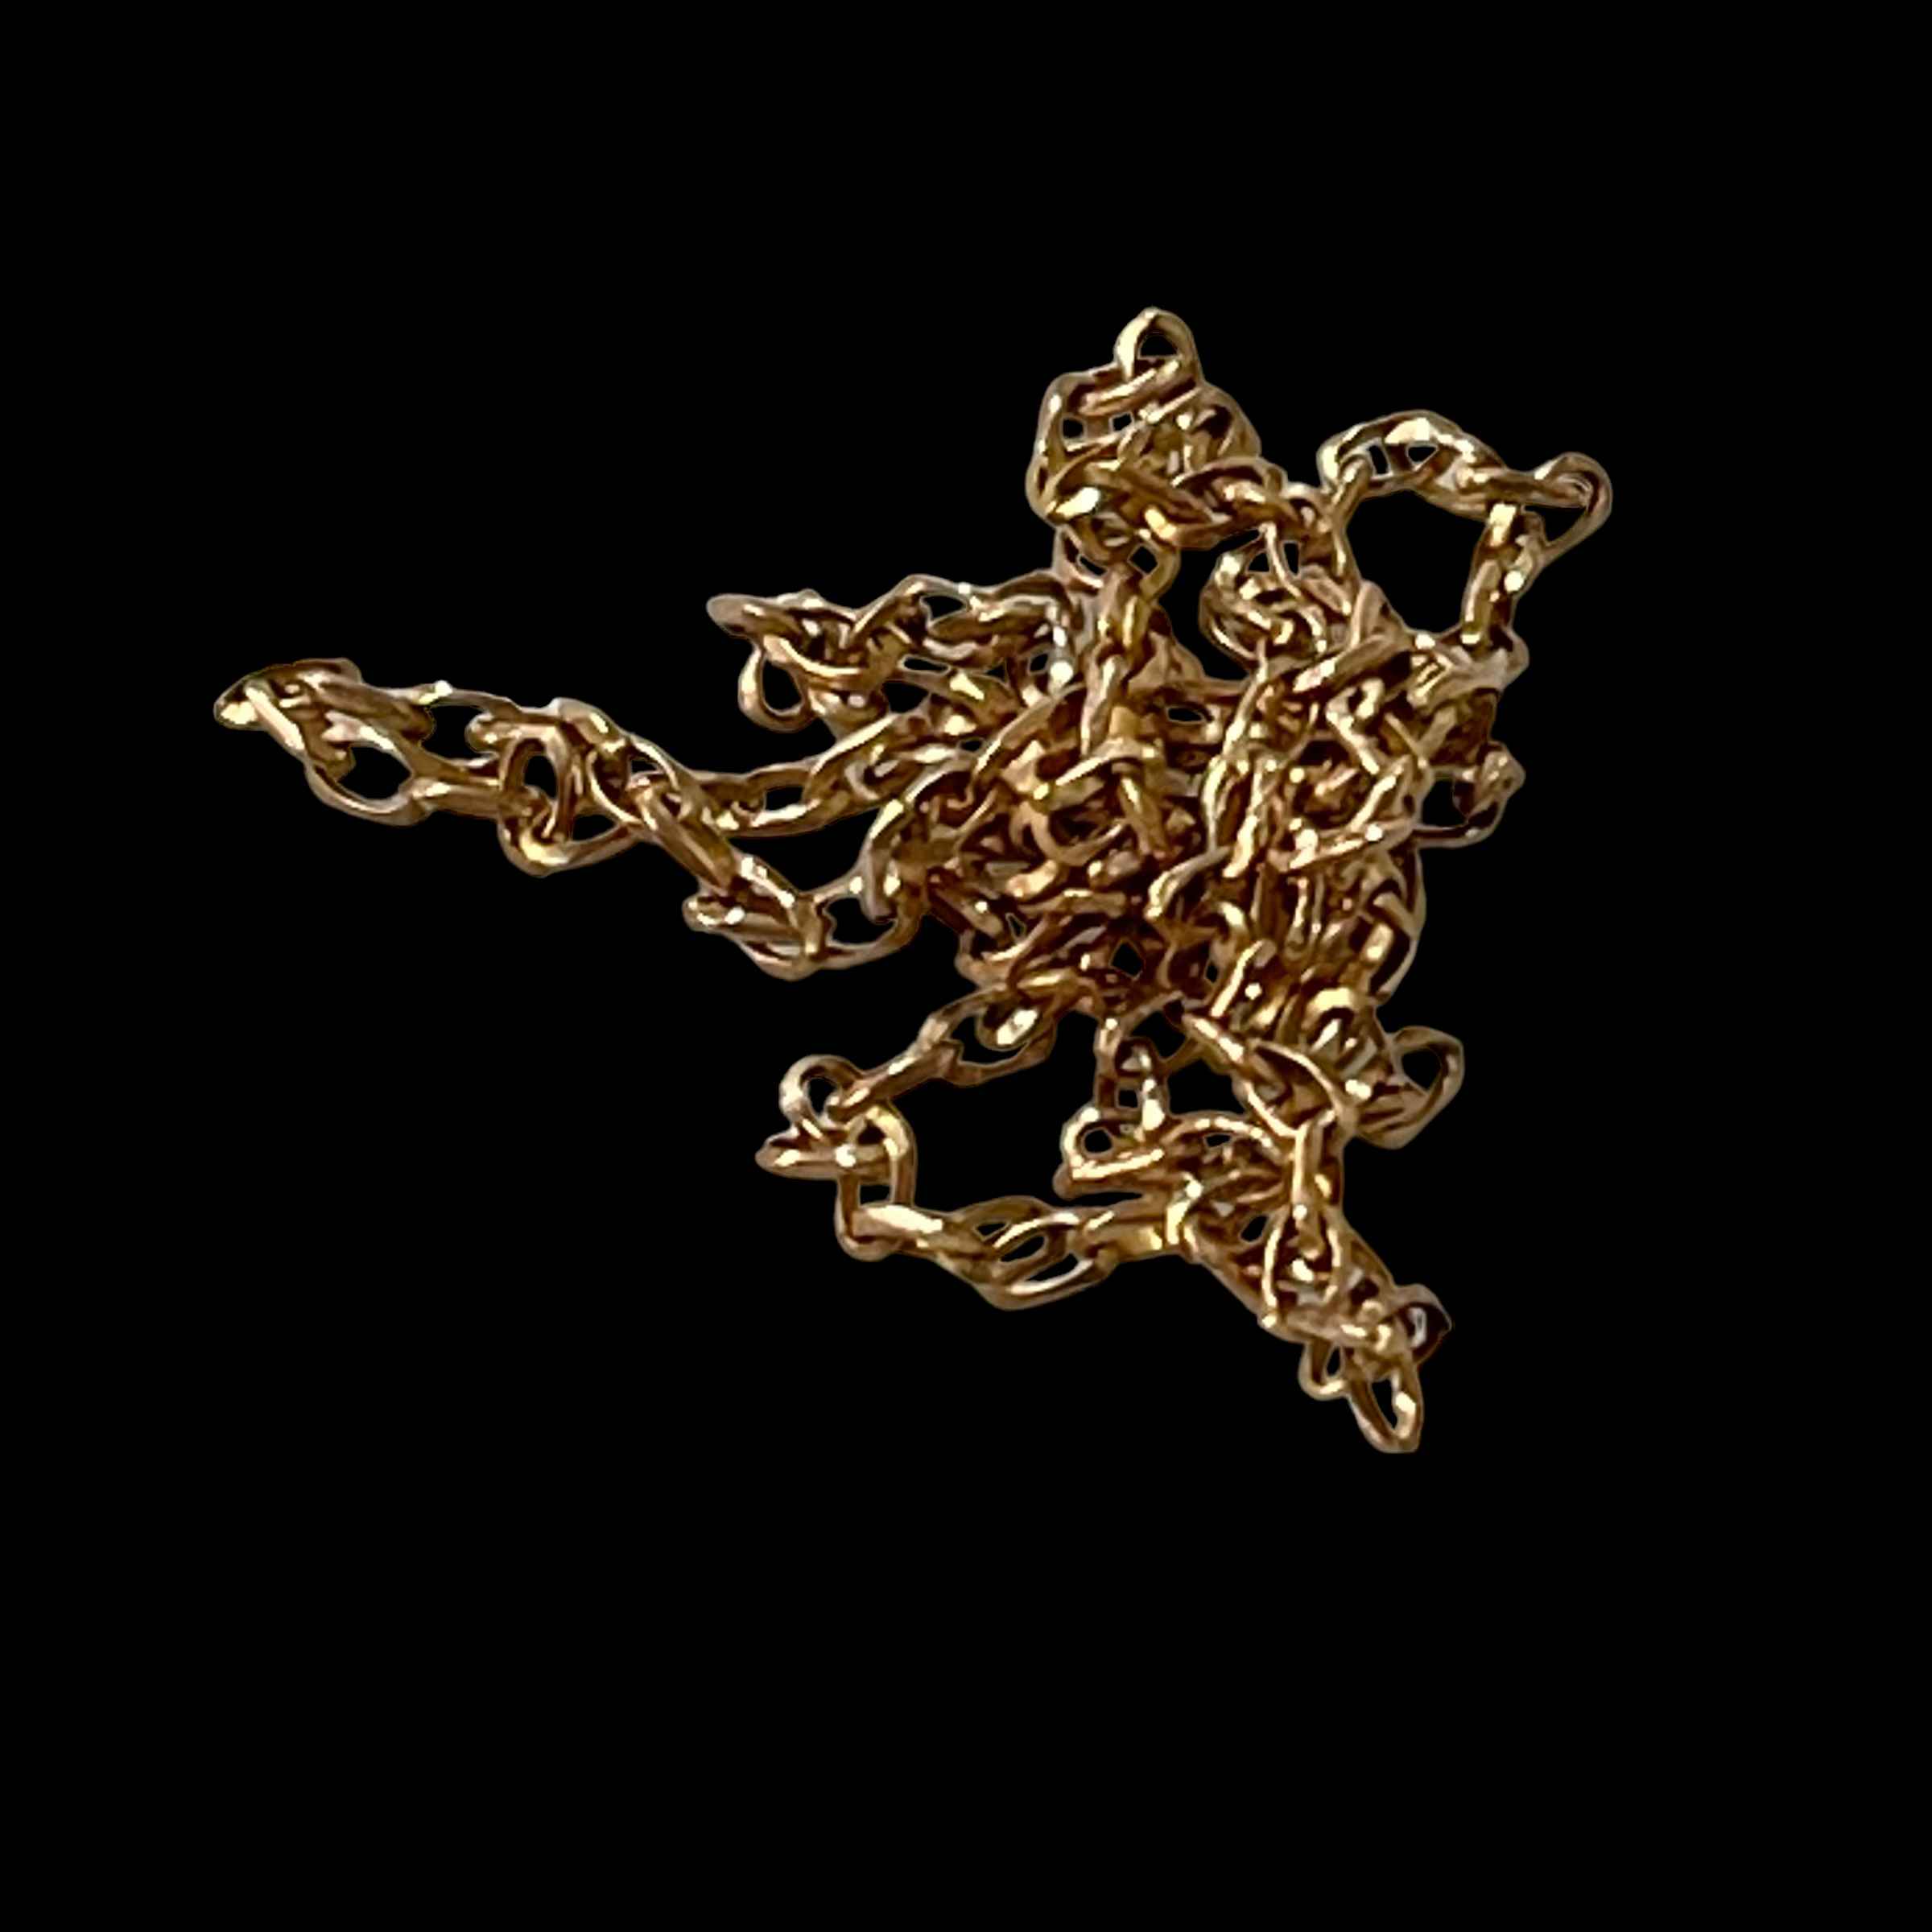 9 carat gold chain link necklace, 58cm.